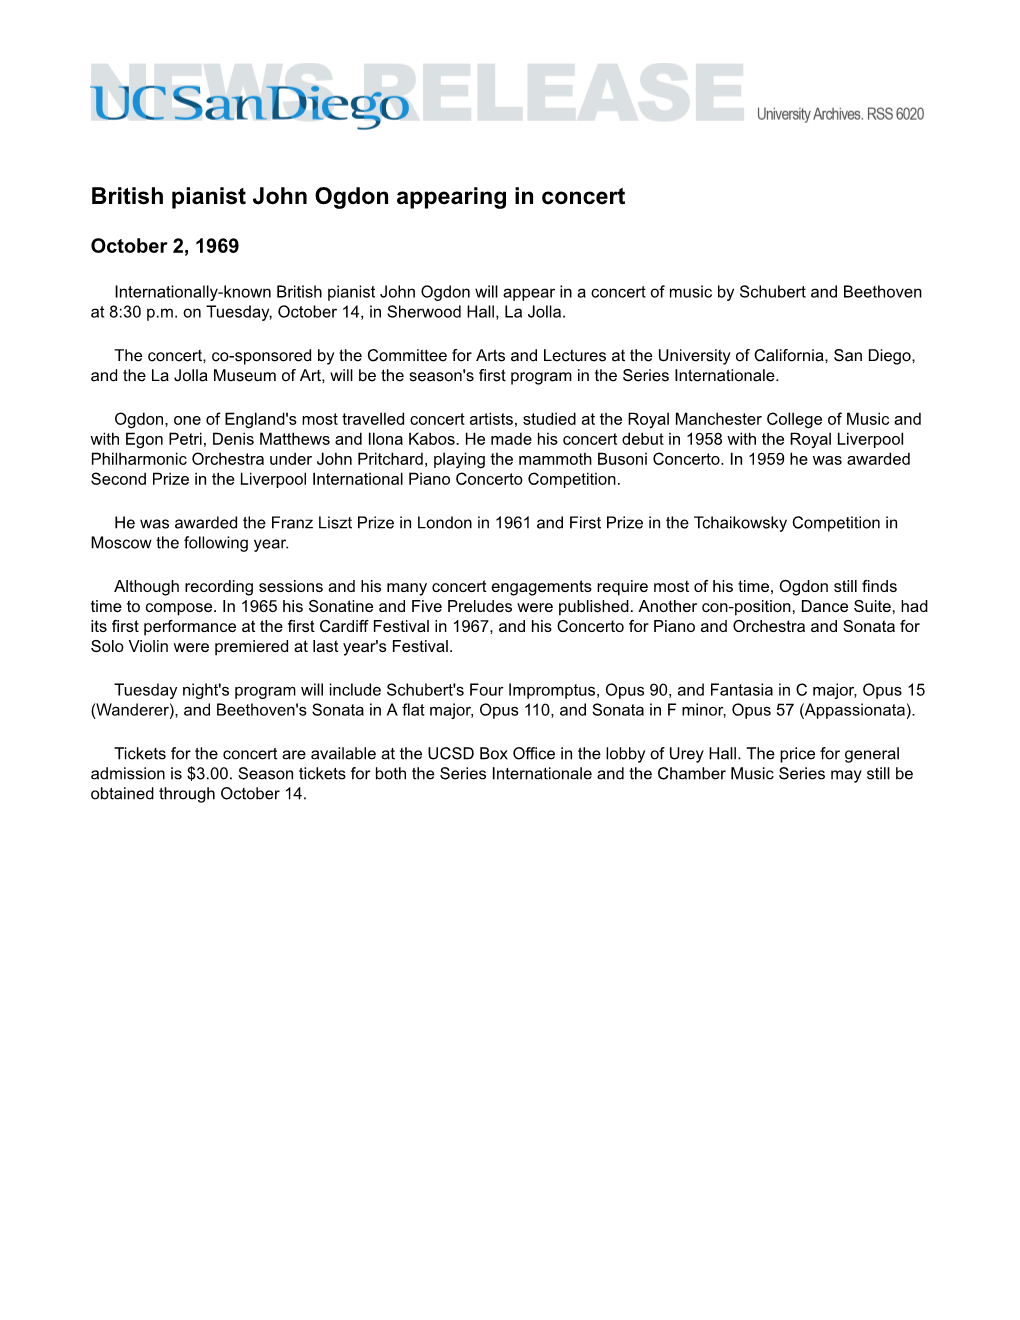 British Pianist John Ogdon Appearing in Concert